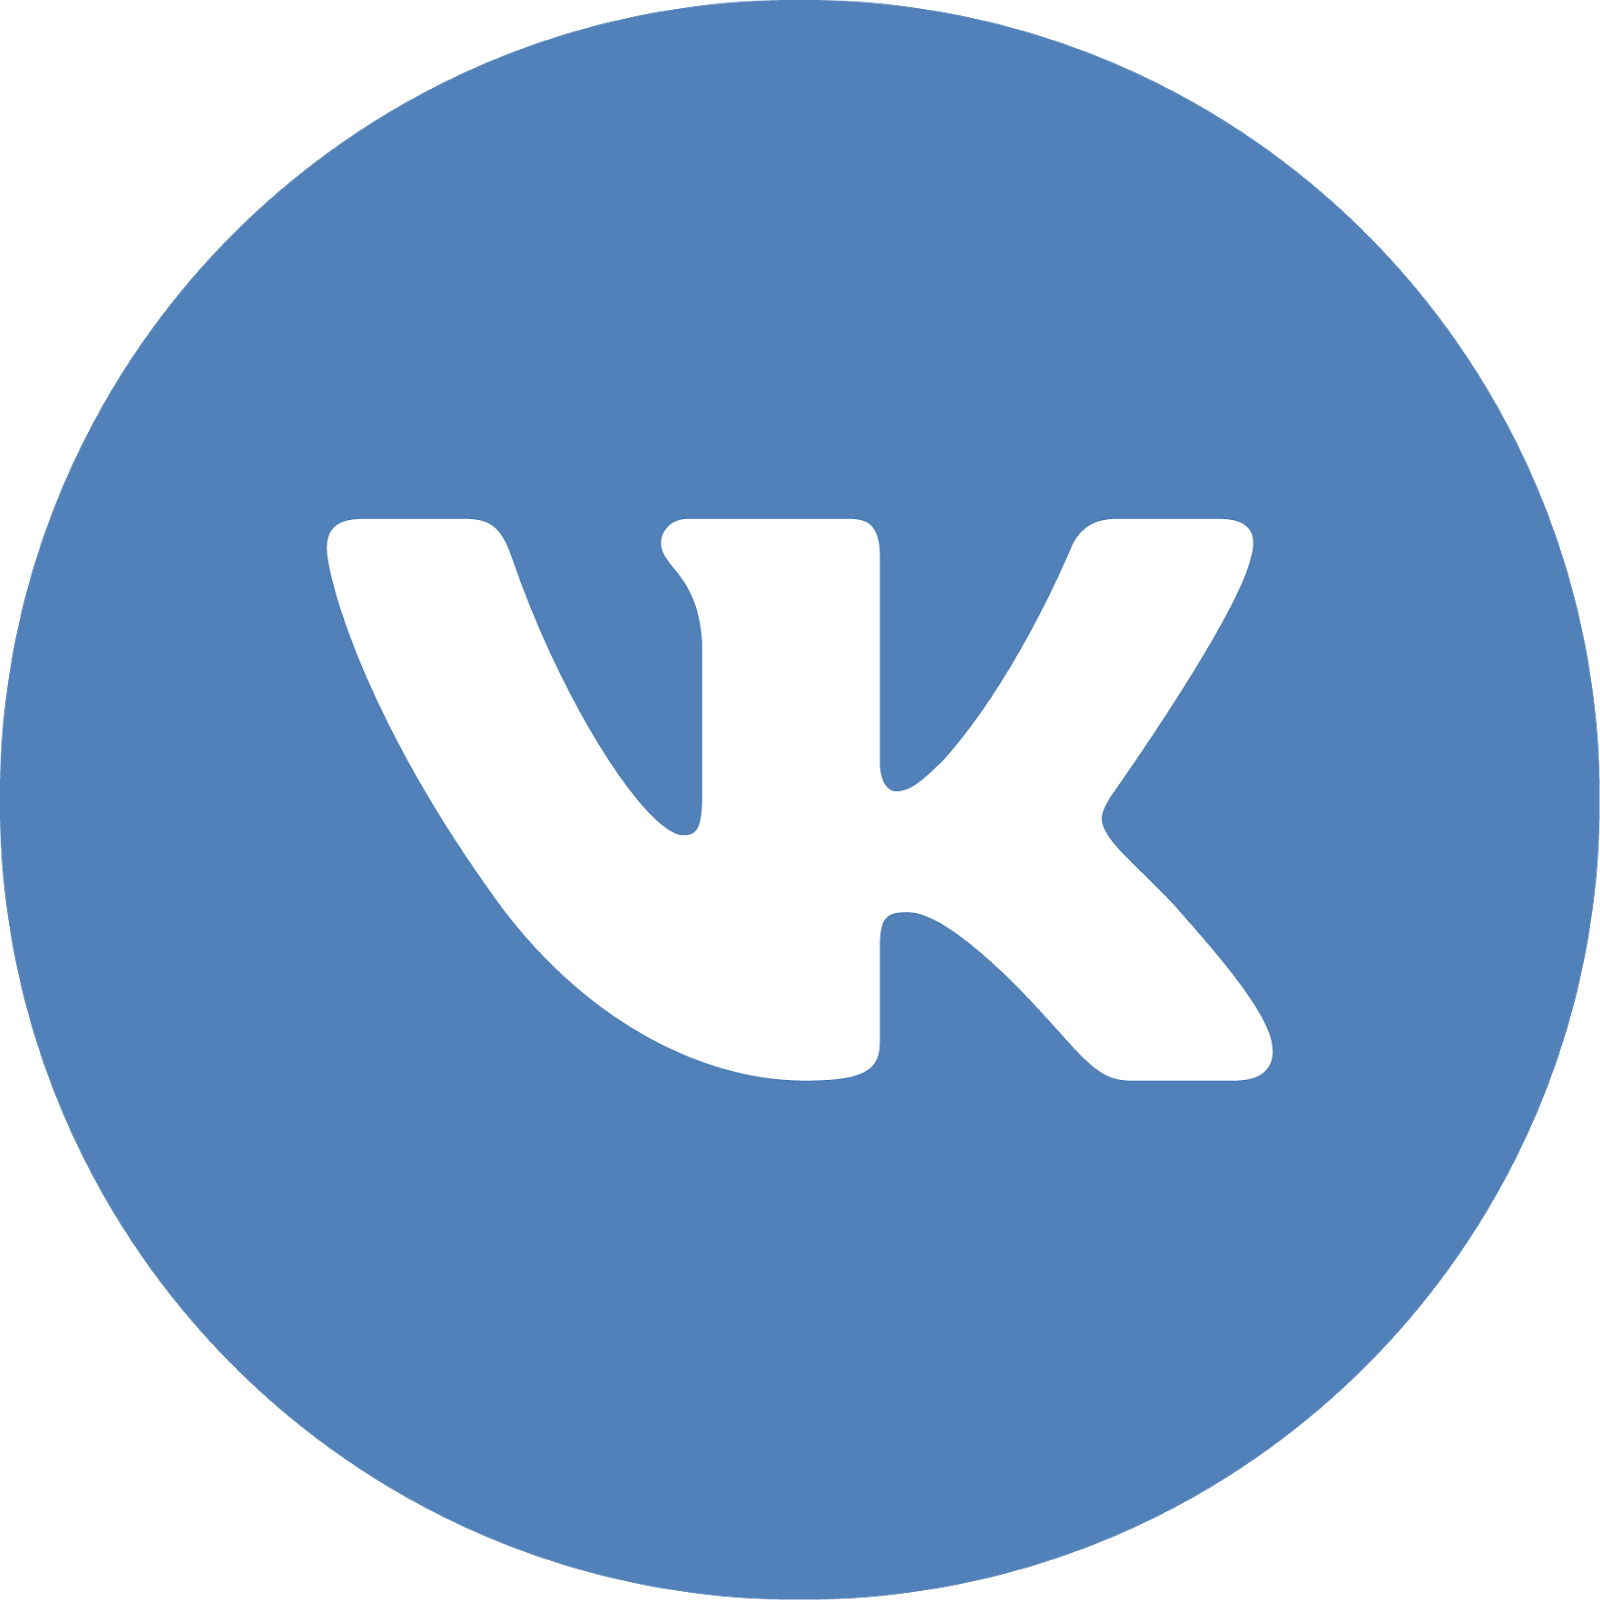 VK Logo - download logo vk social media svg eps png psd ai vector - el fonts ...